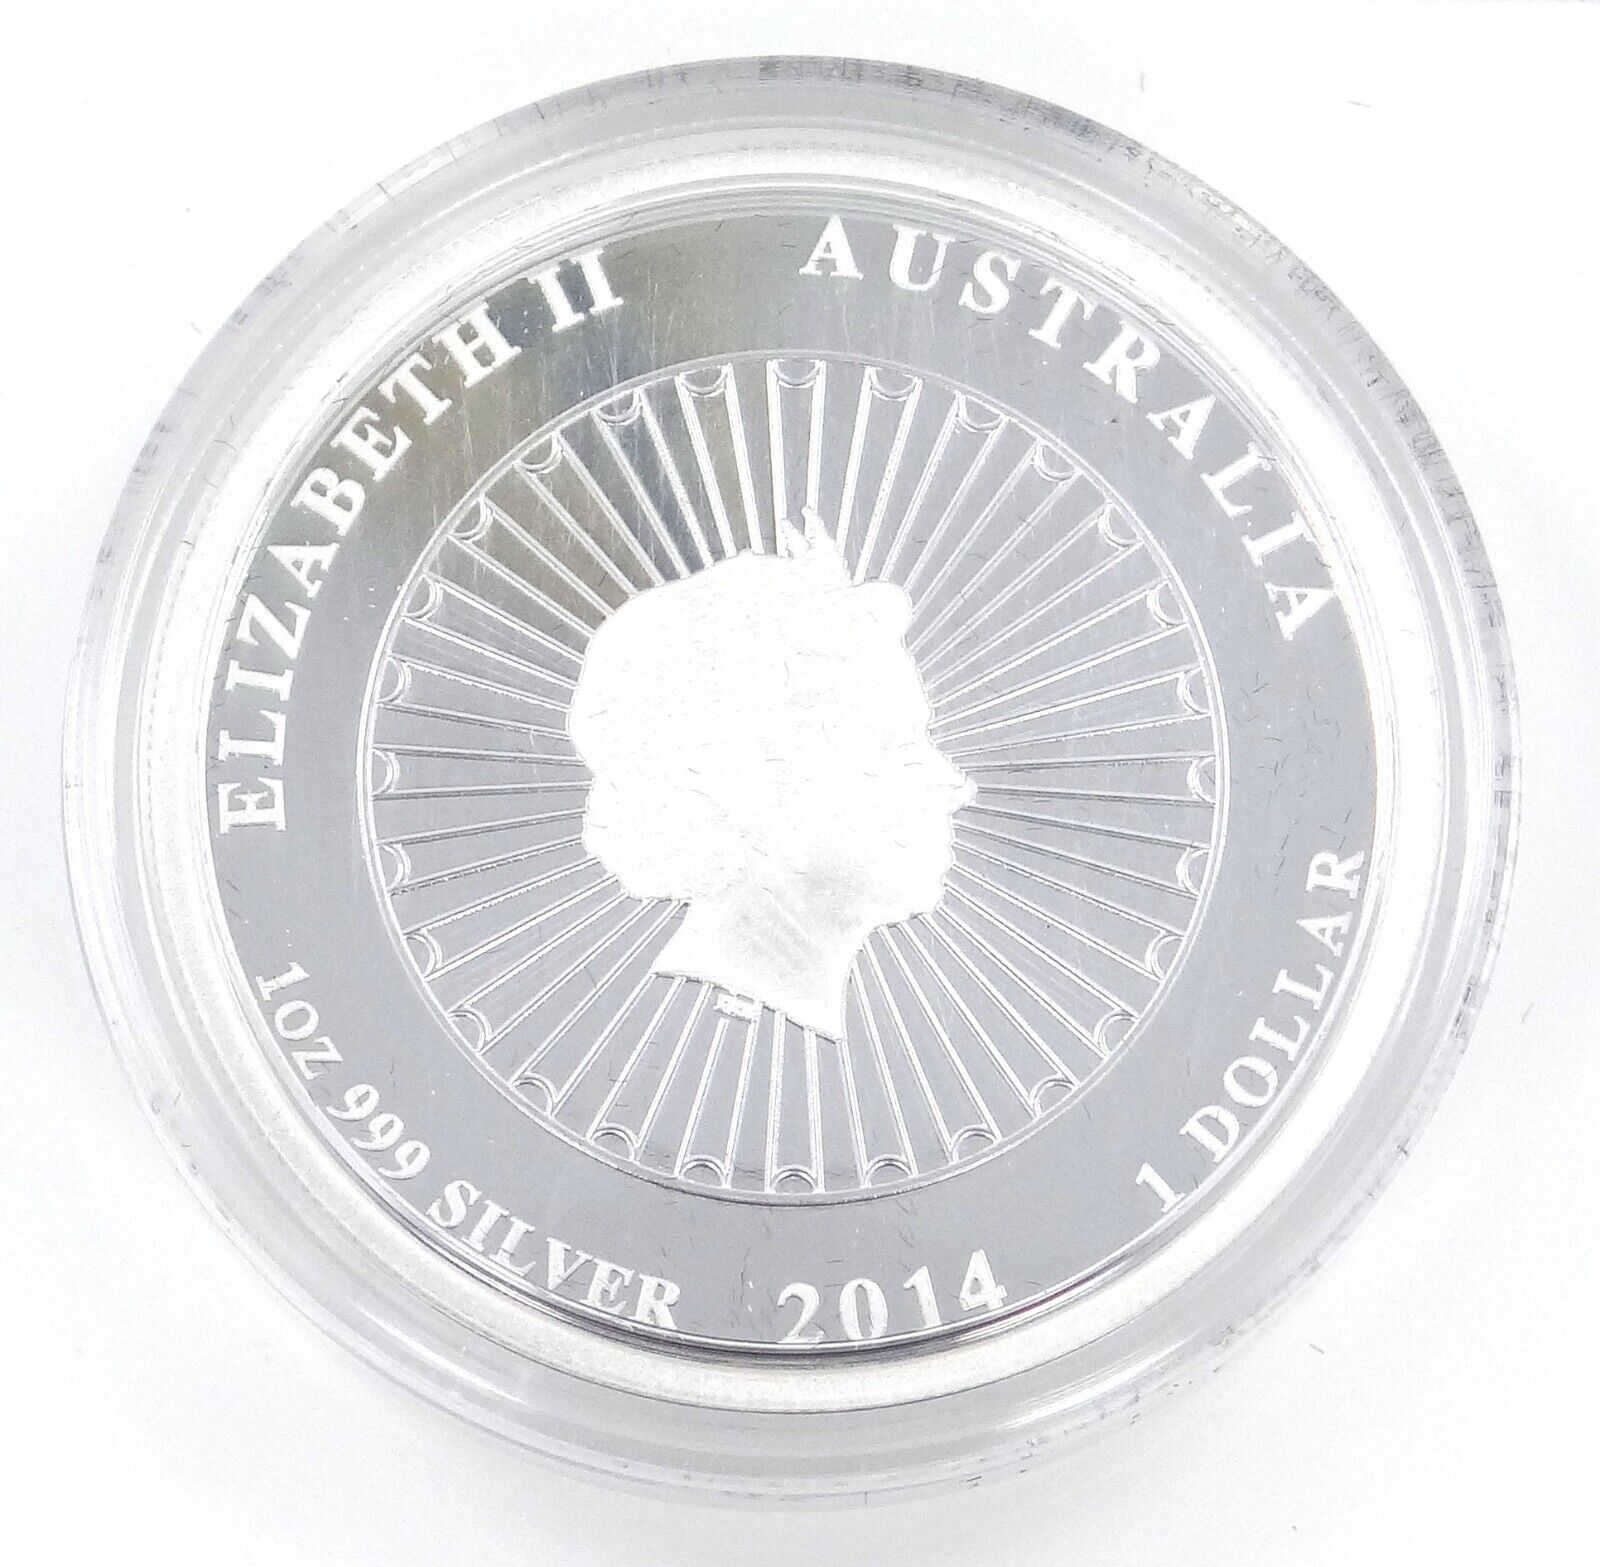 1 Oz Silver Coin 2014 $1 Australia Australian Abalone Shell Proof Coin Version 3-classypw.com-2